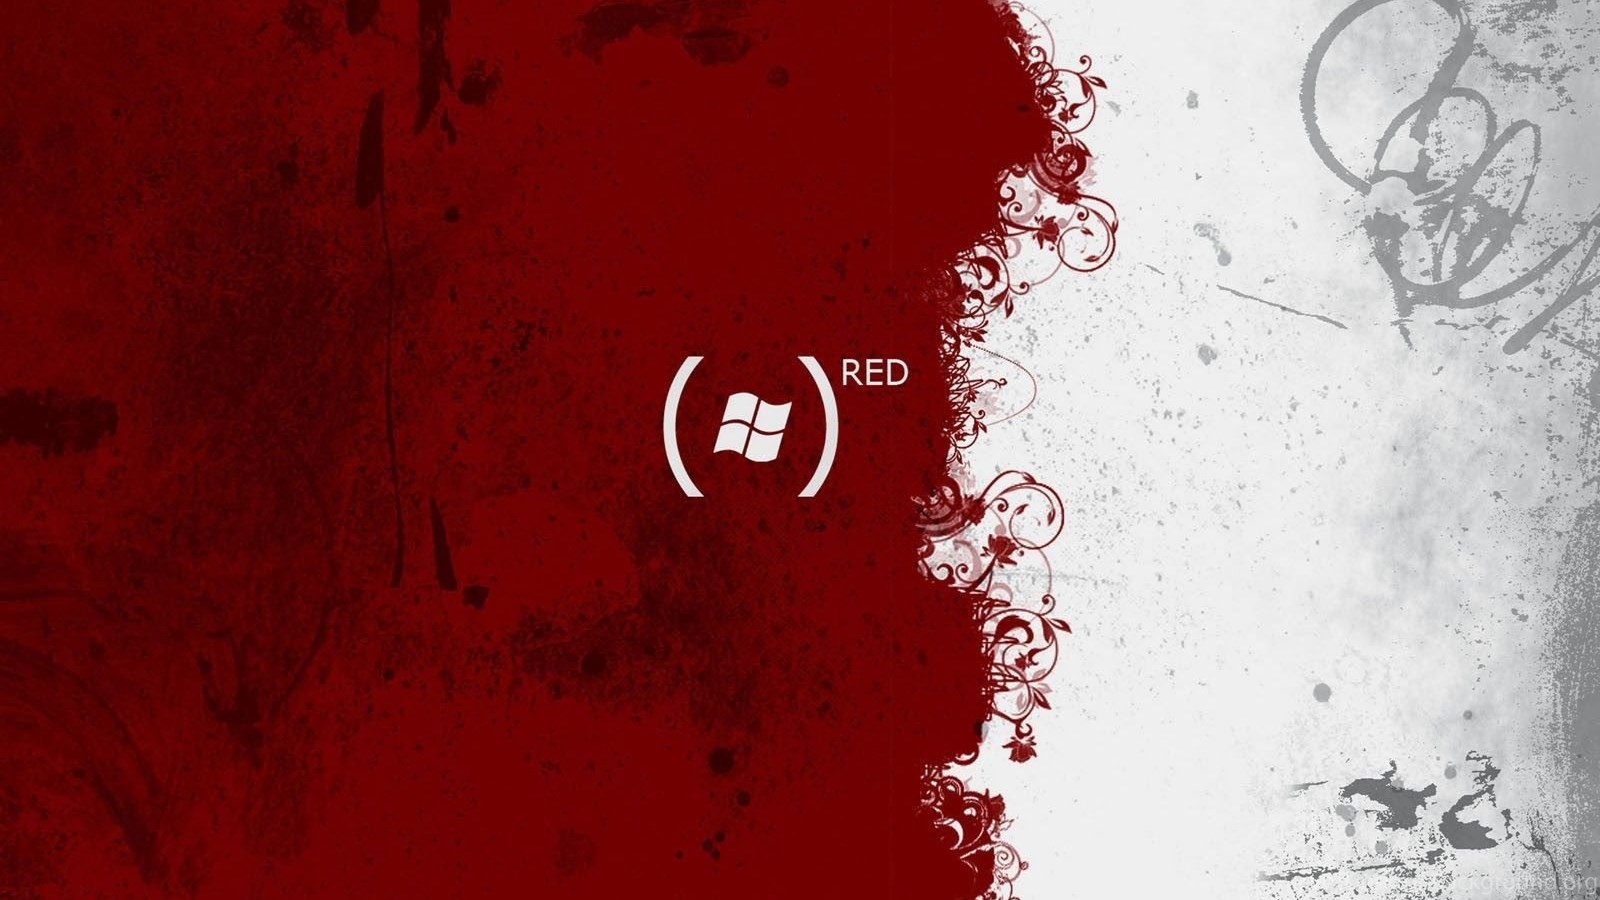 Wallpaper: Windows 7 Red Wallpaper Desktop Background